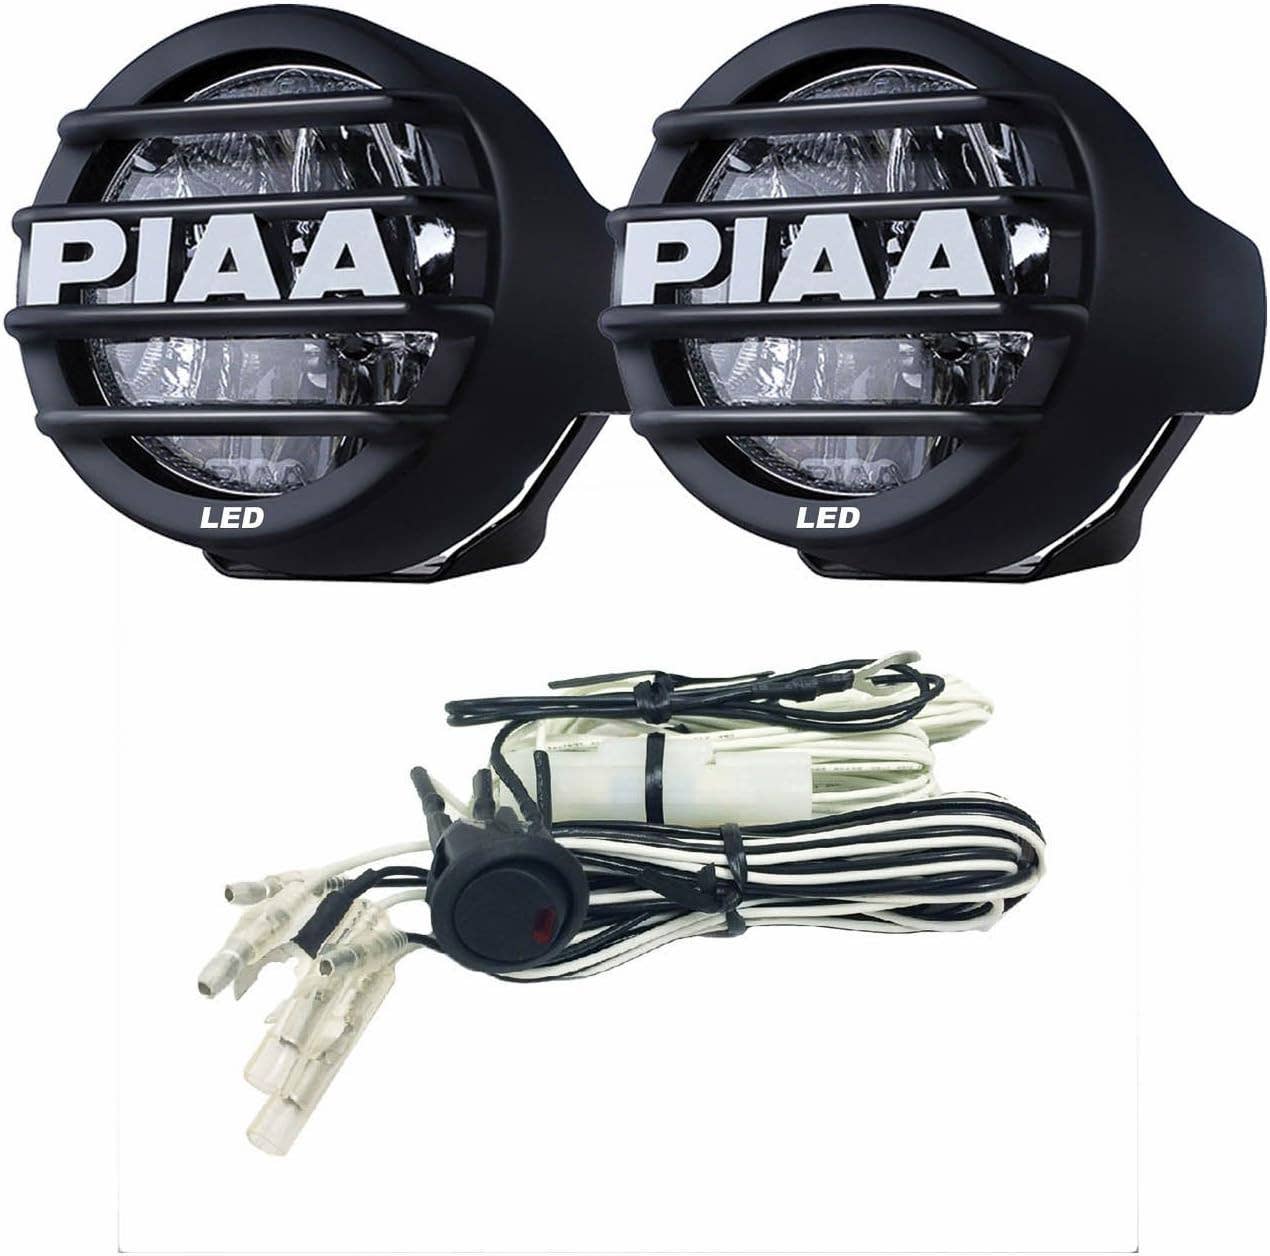 Piaa 3.5-Inch SAE Compliant LED Fog Light Kit